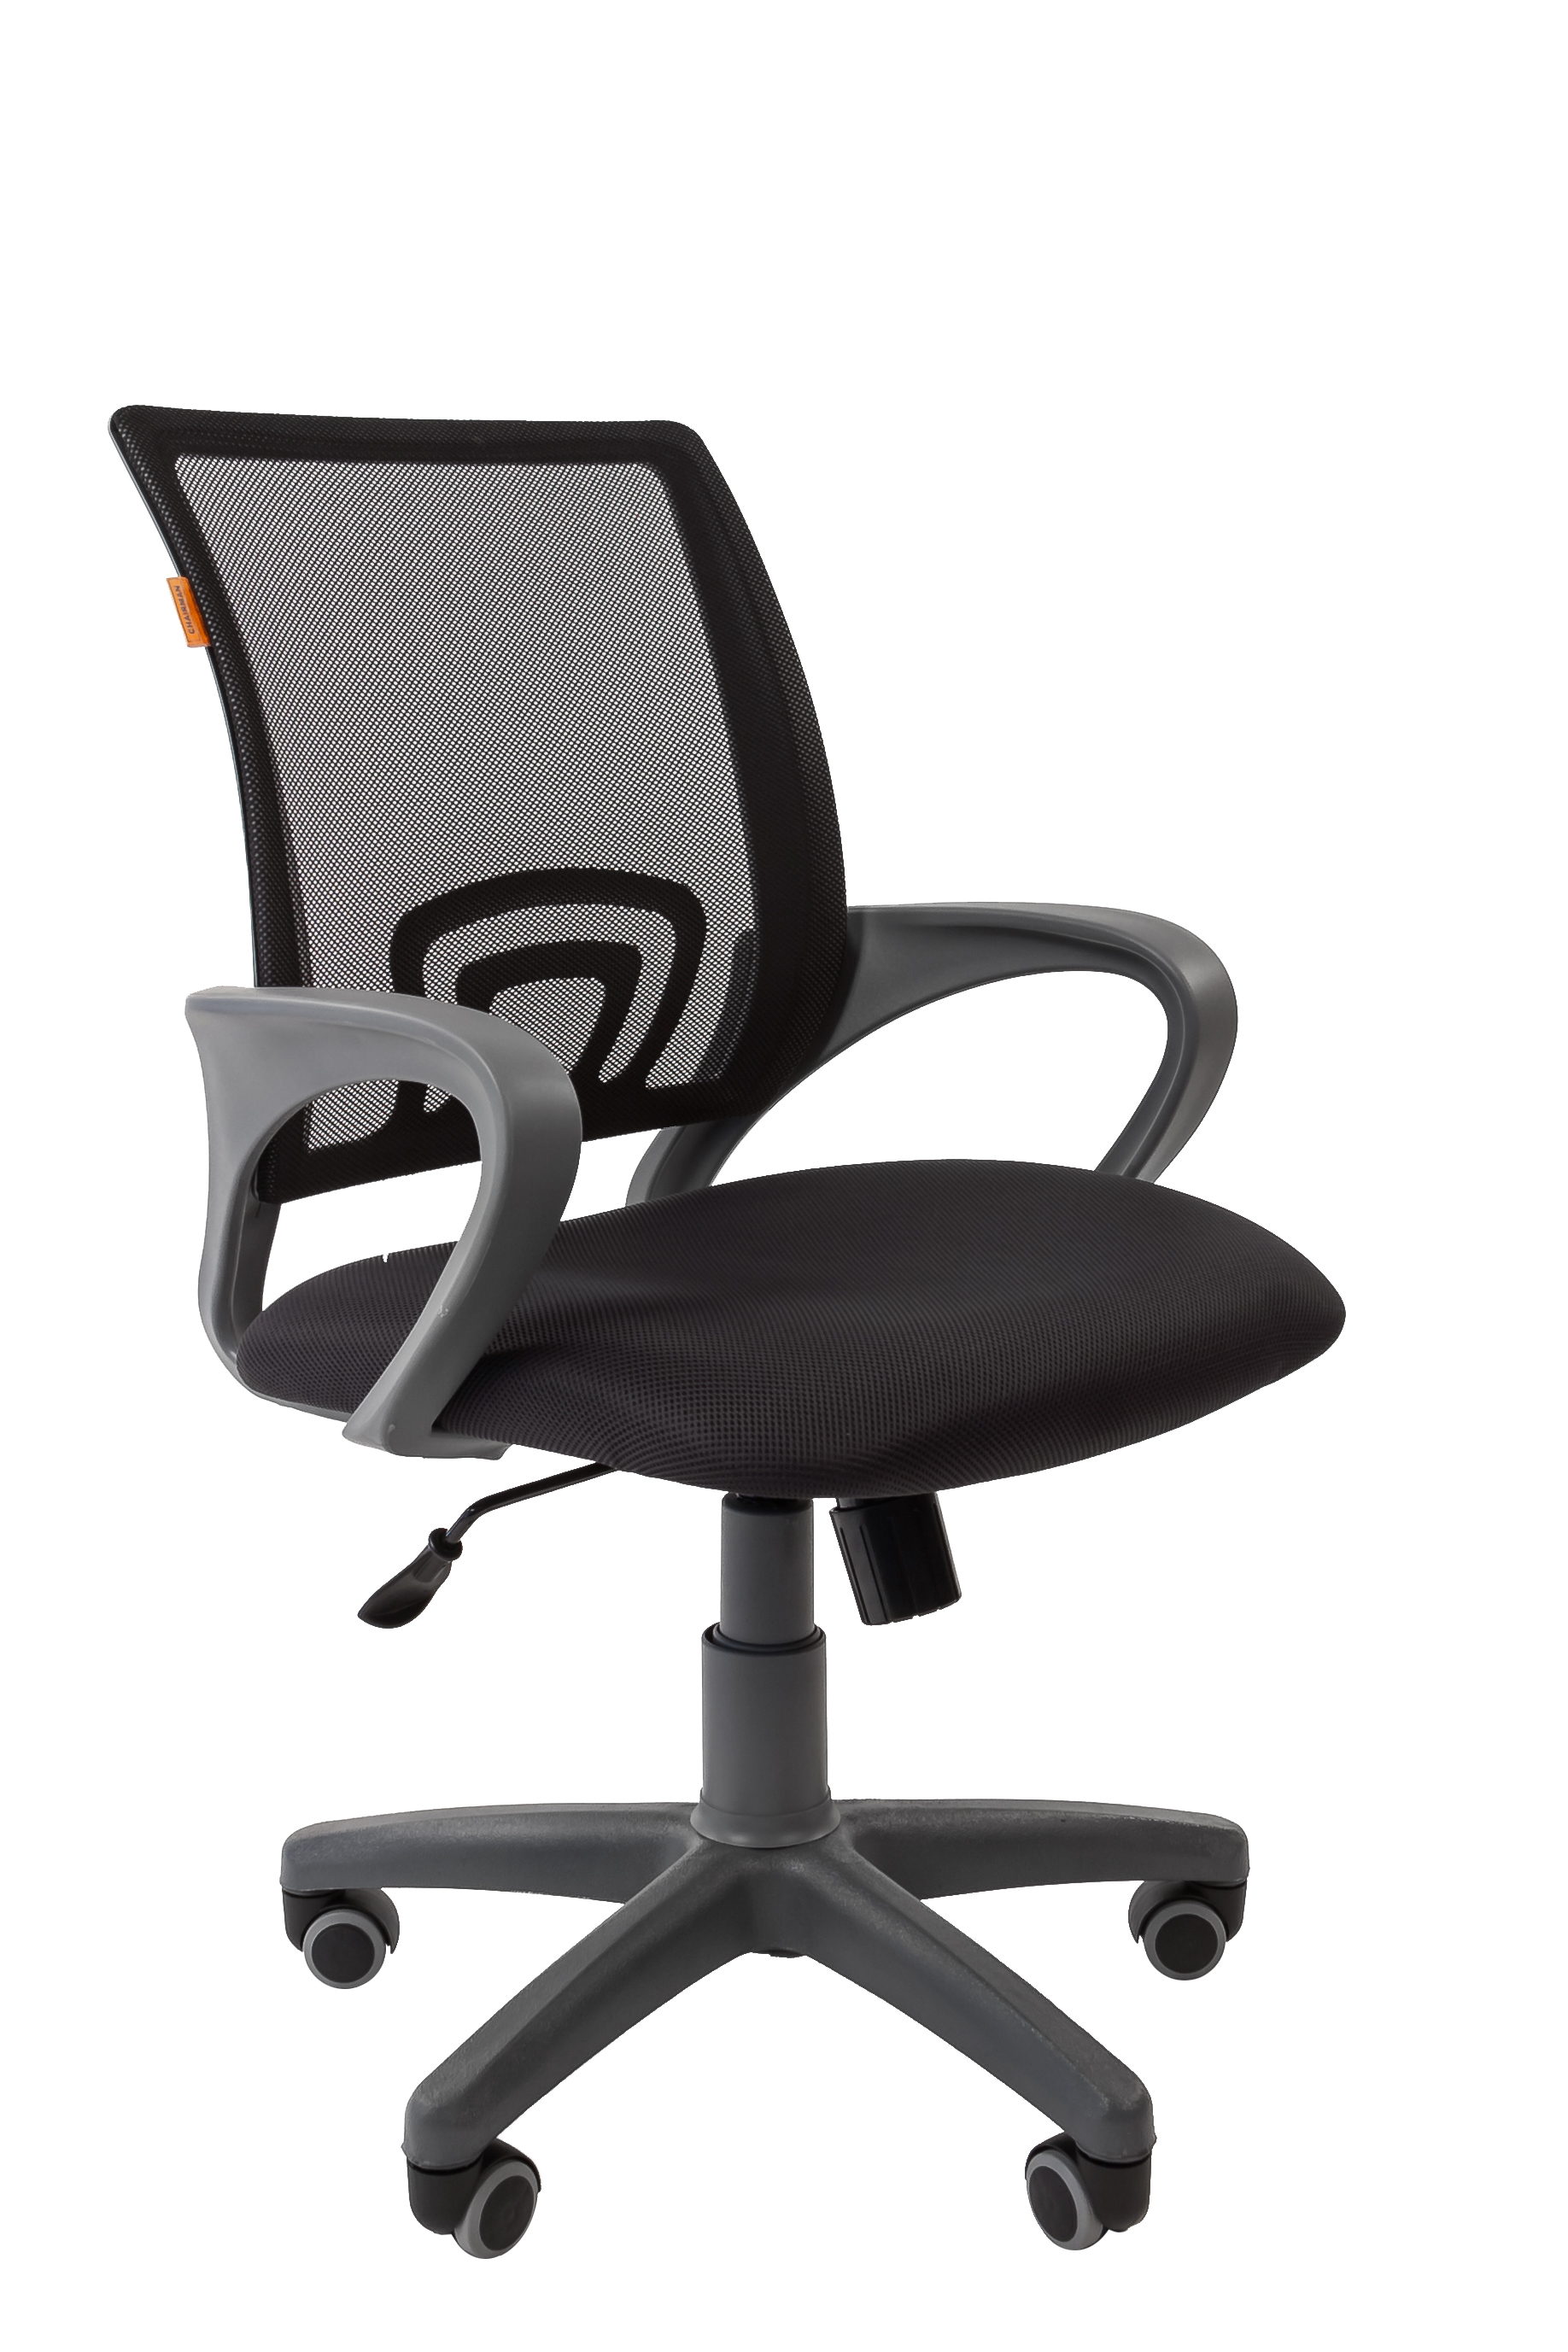 CHAIRMAN 696 GREY кресло офисное (кресло ch 696 GREY): цена, фото .